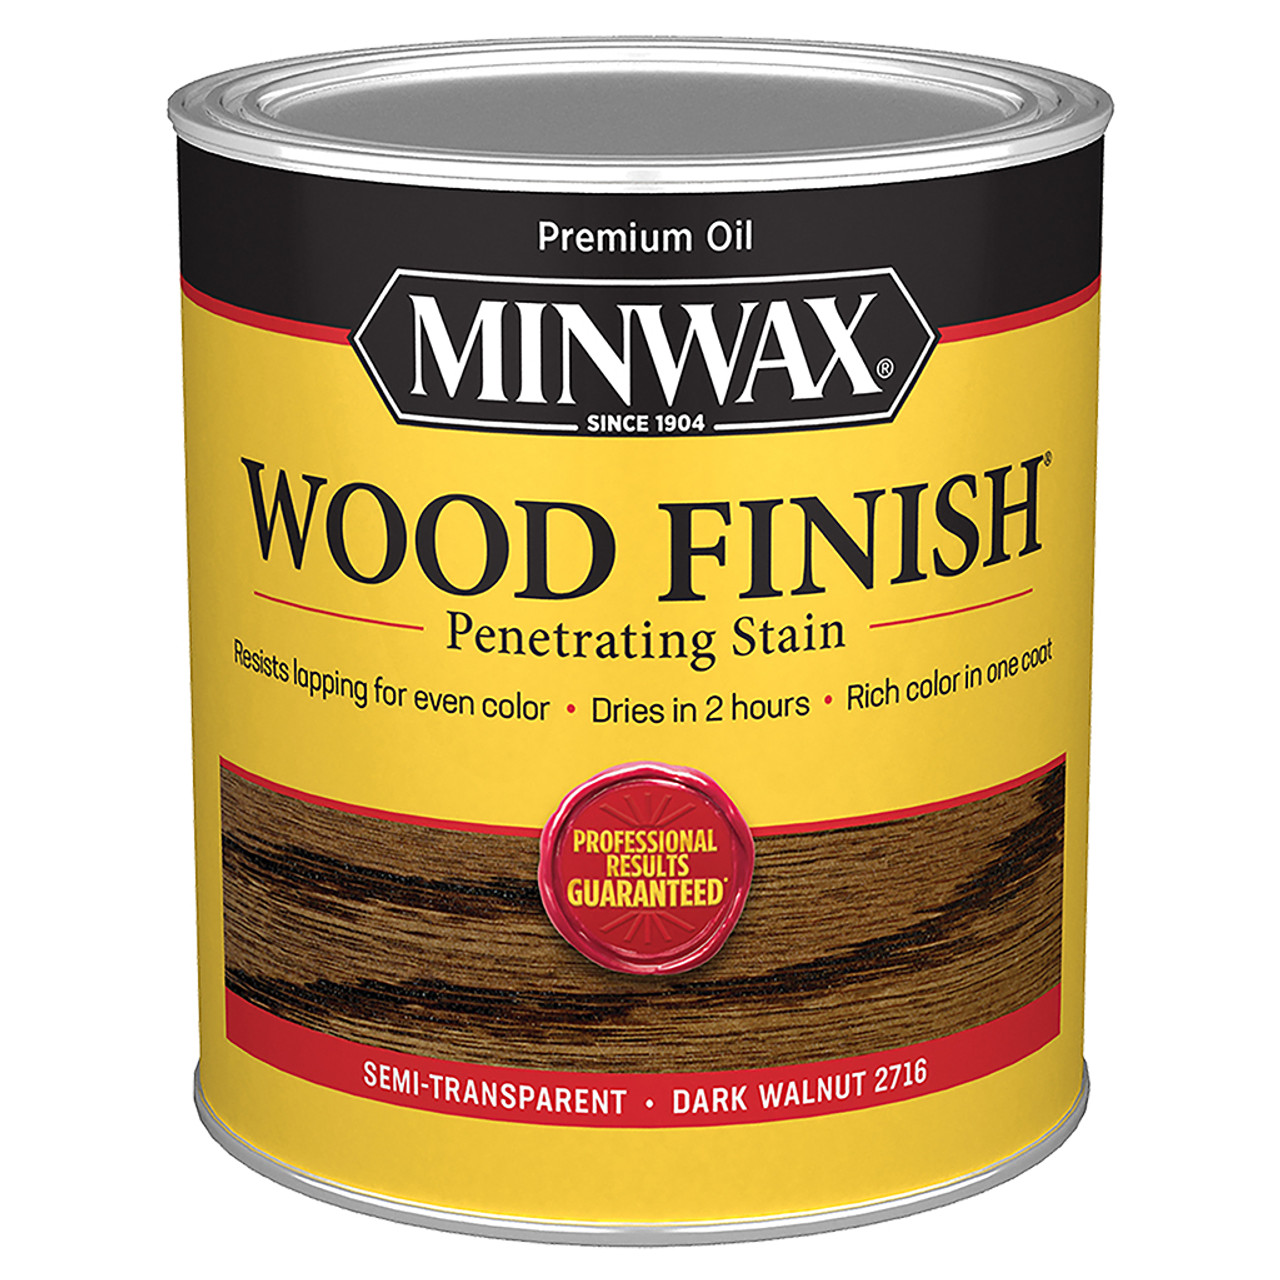 Minwax Wood Finish Dark Walnut Stain Marker in the Wood Stain